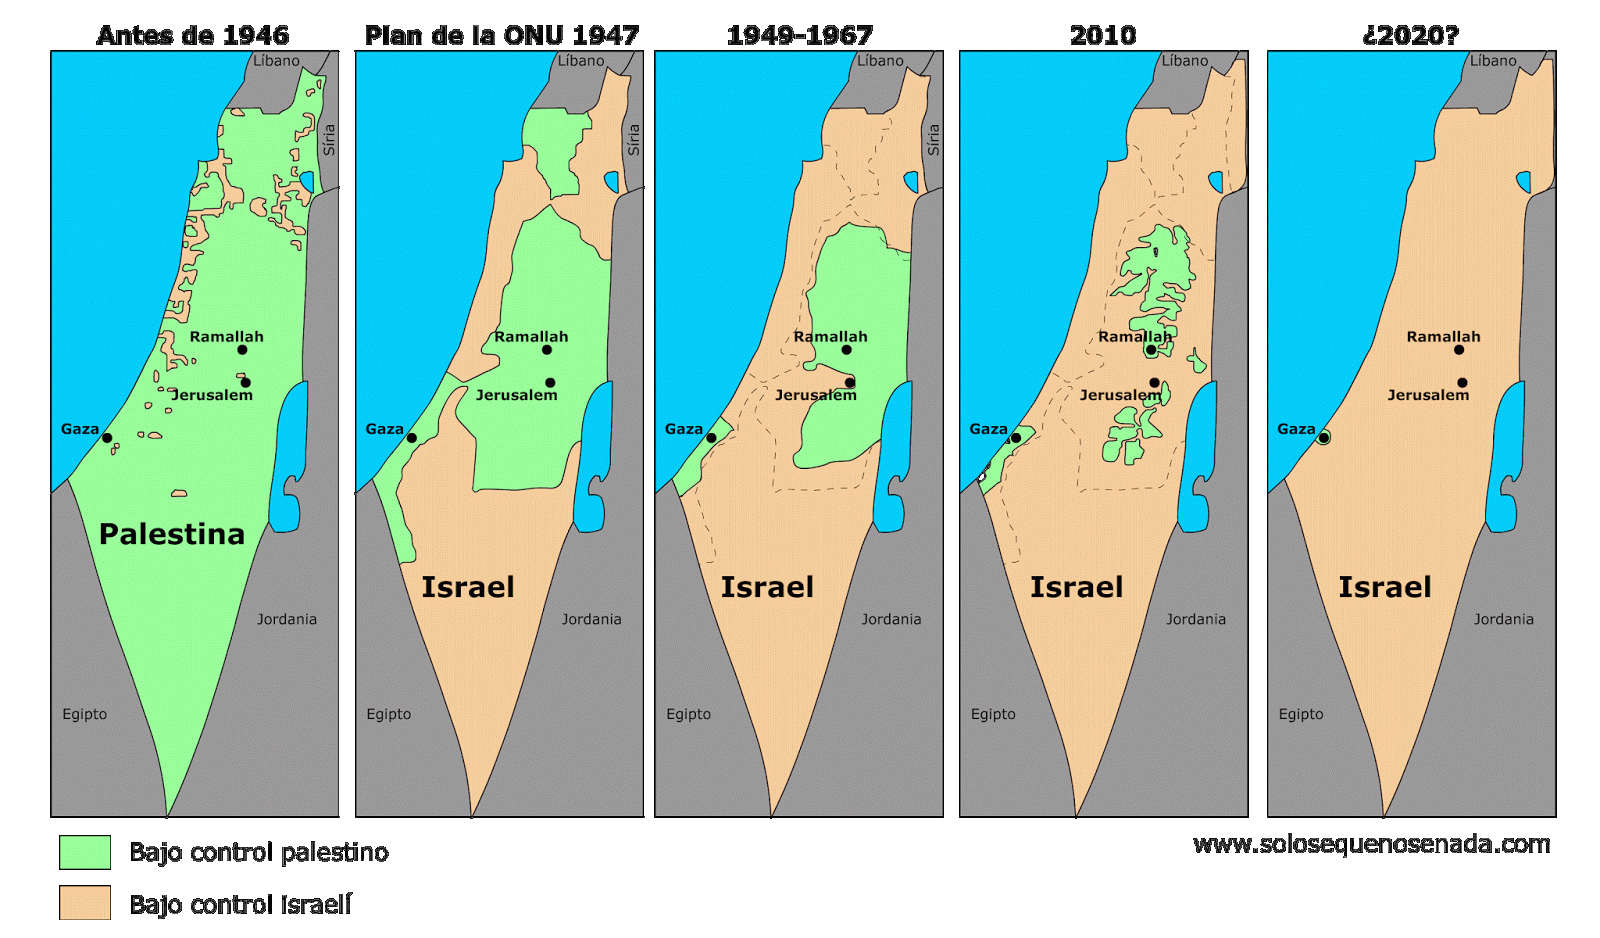 palestina-israel-historia-mapa